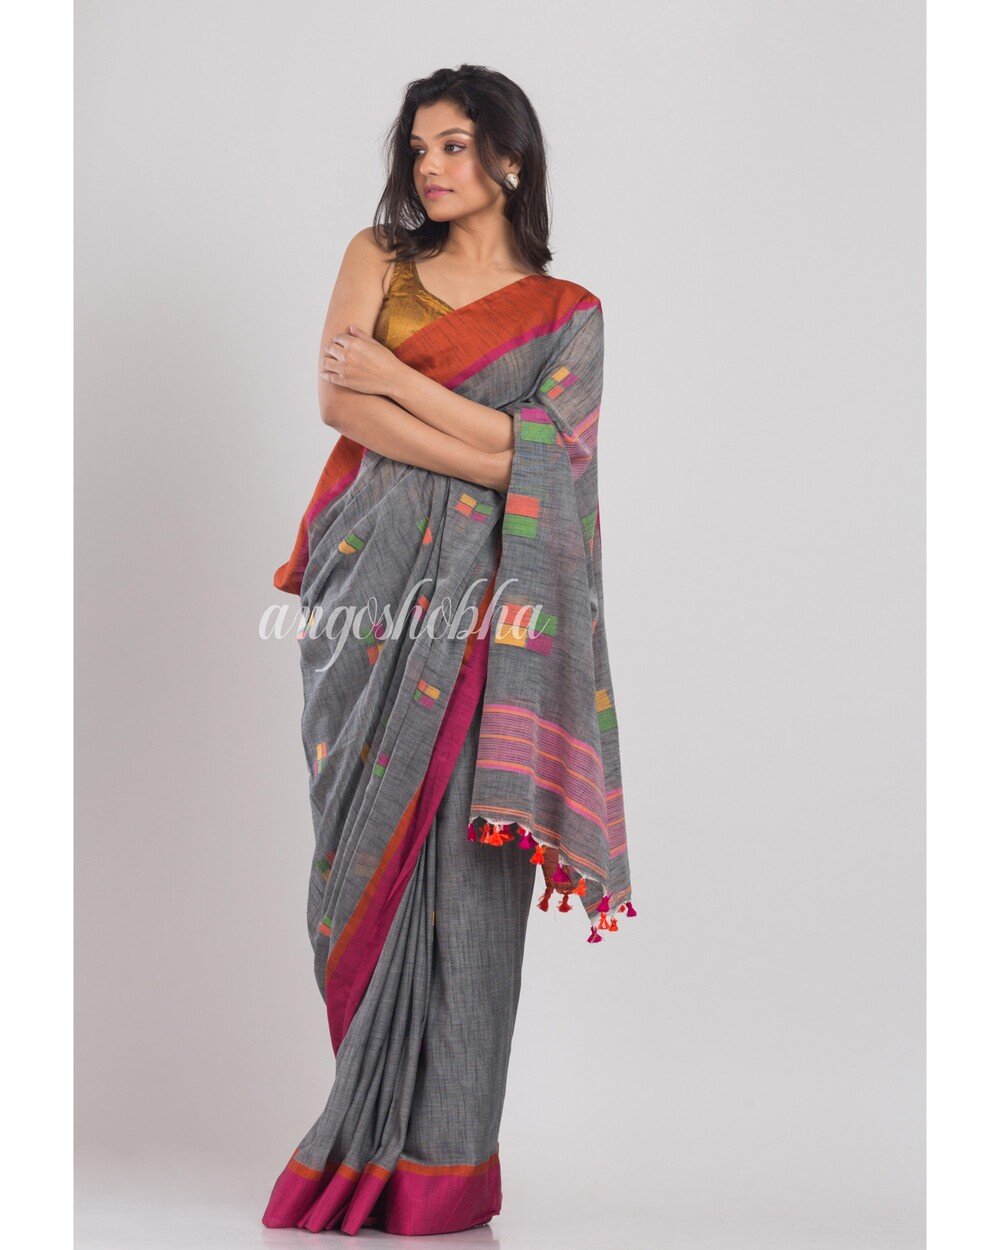 Women's Grey Cotton Jamdani Saree - Angoshobha